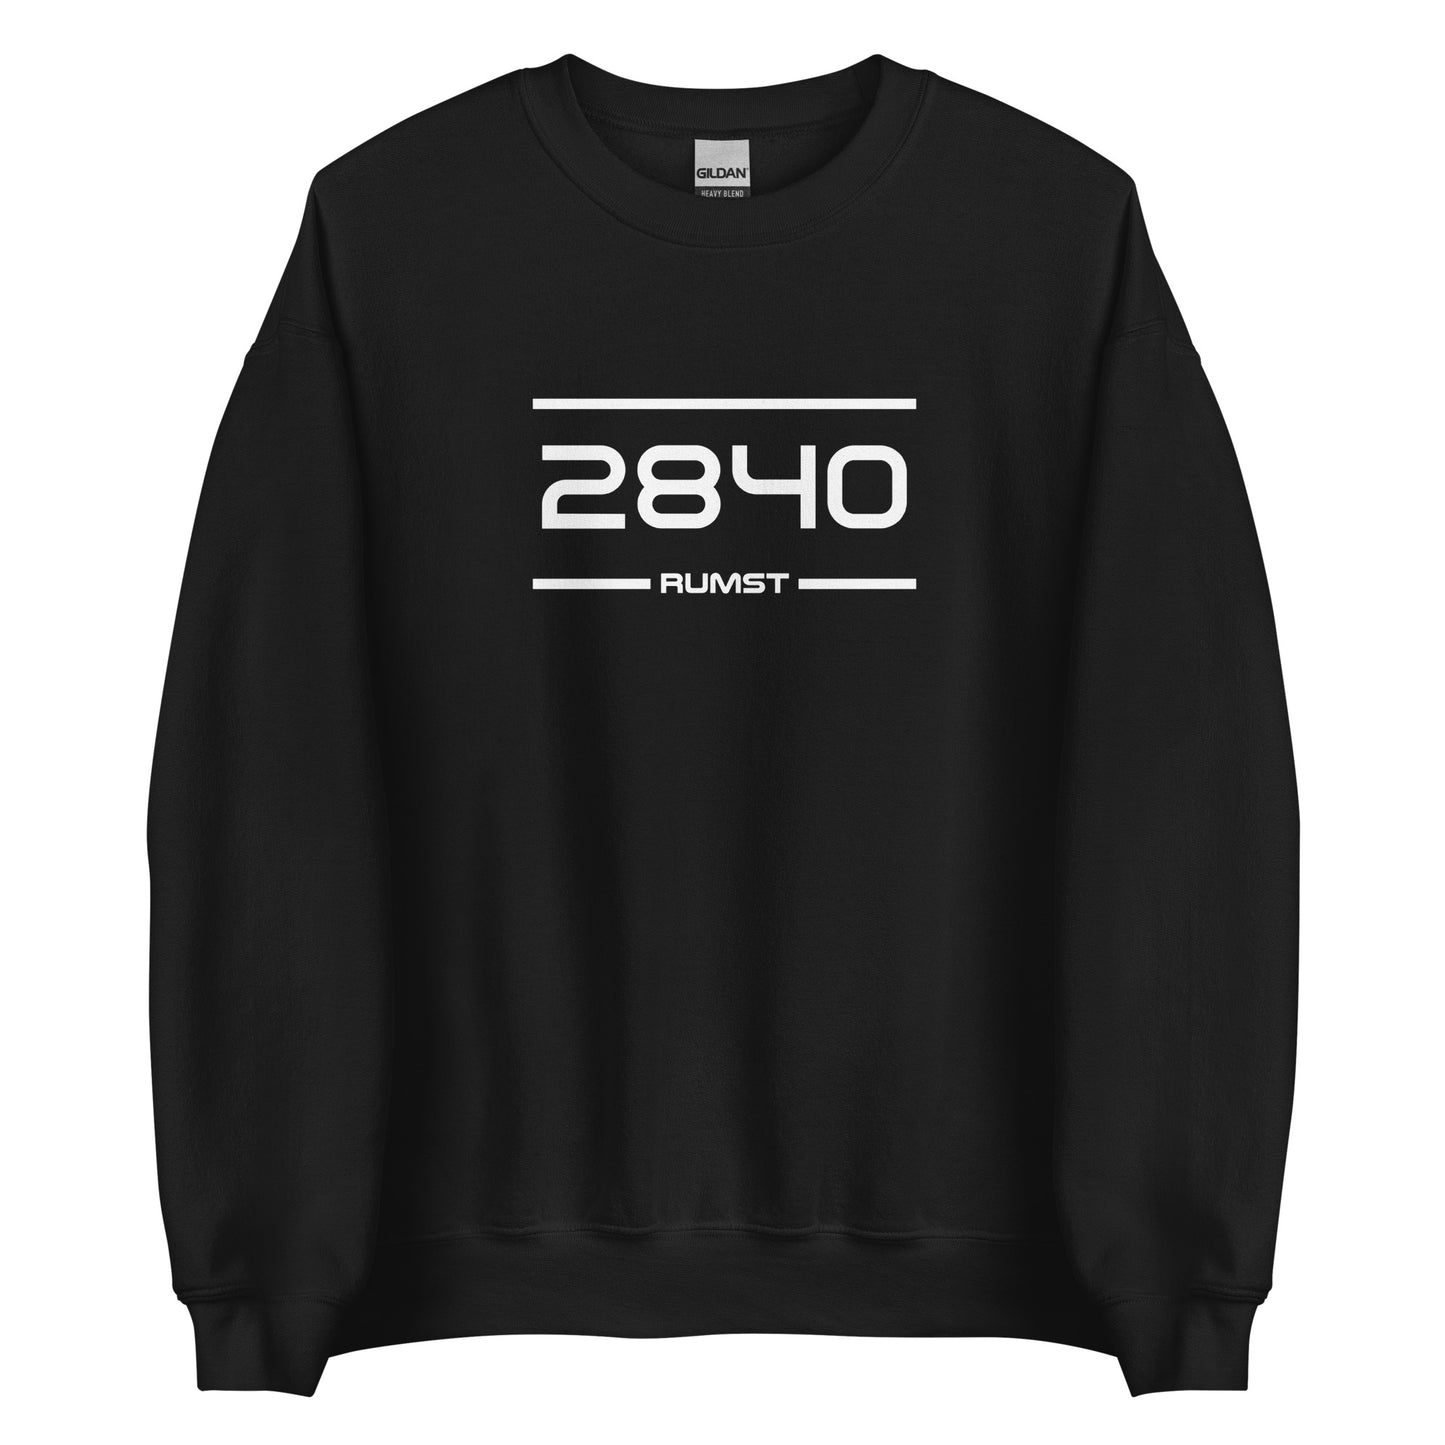 Sweater - 2840 - Rumst (M/V)